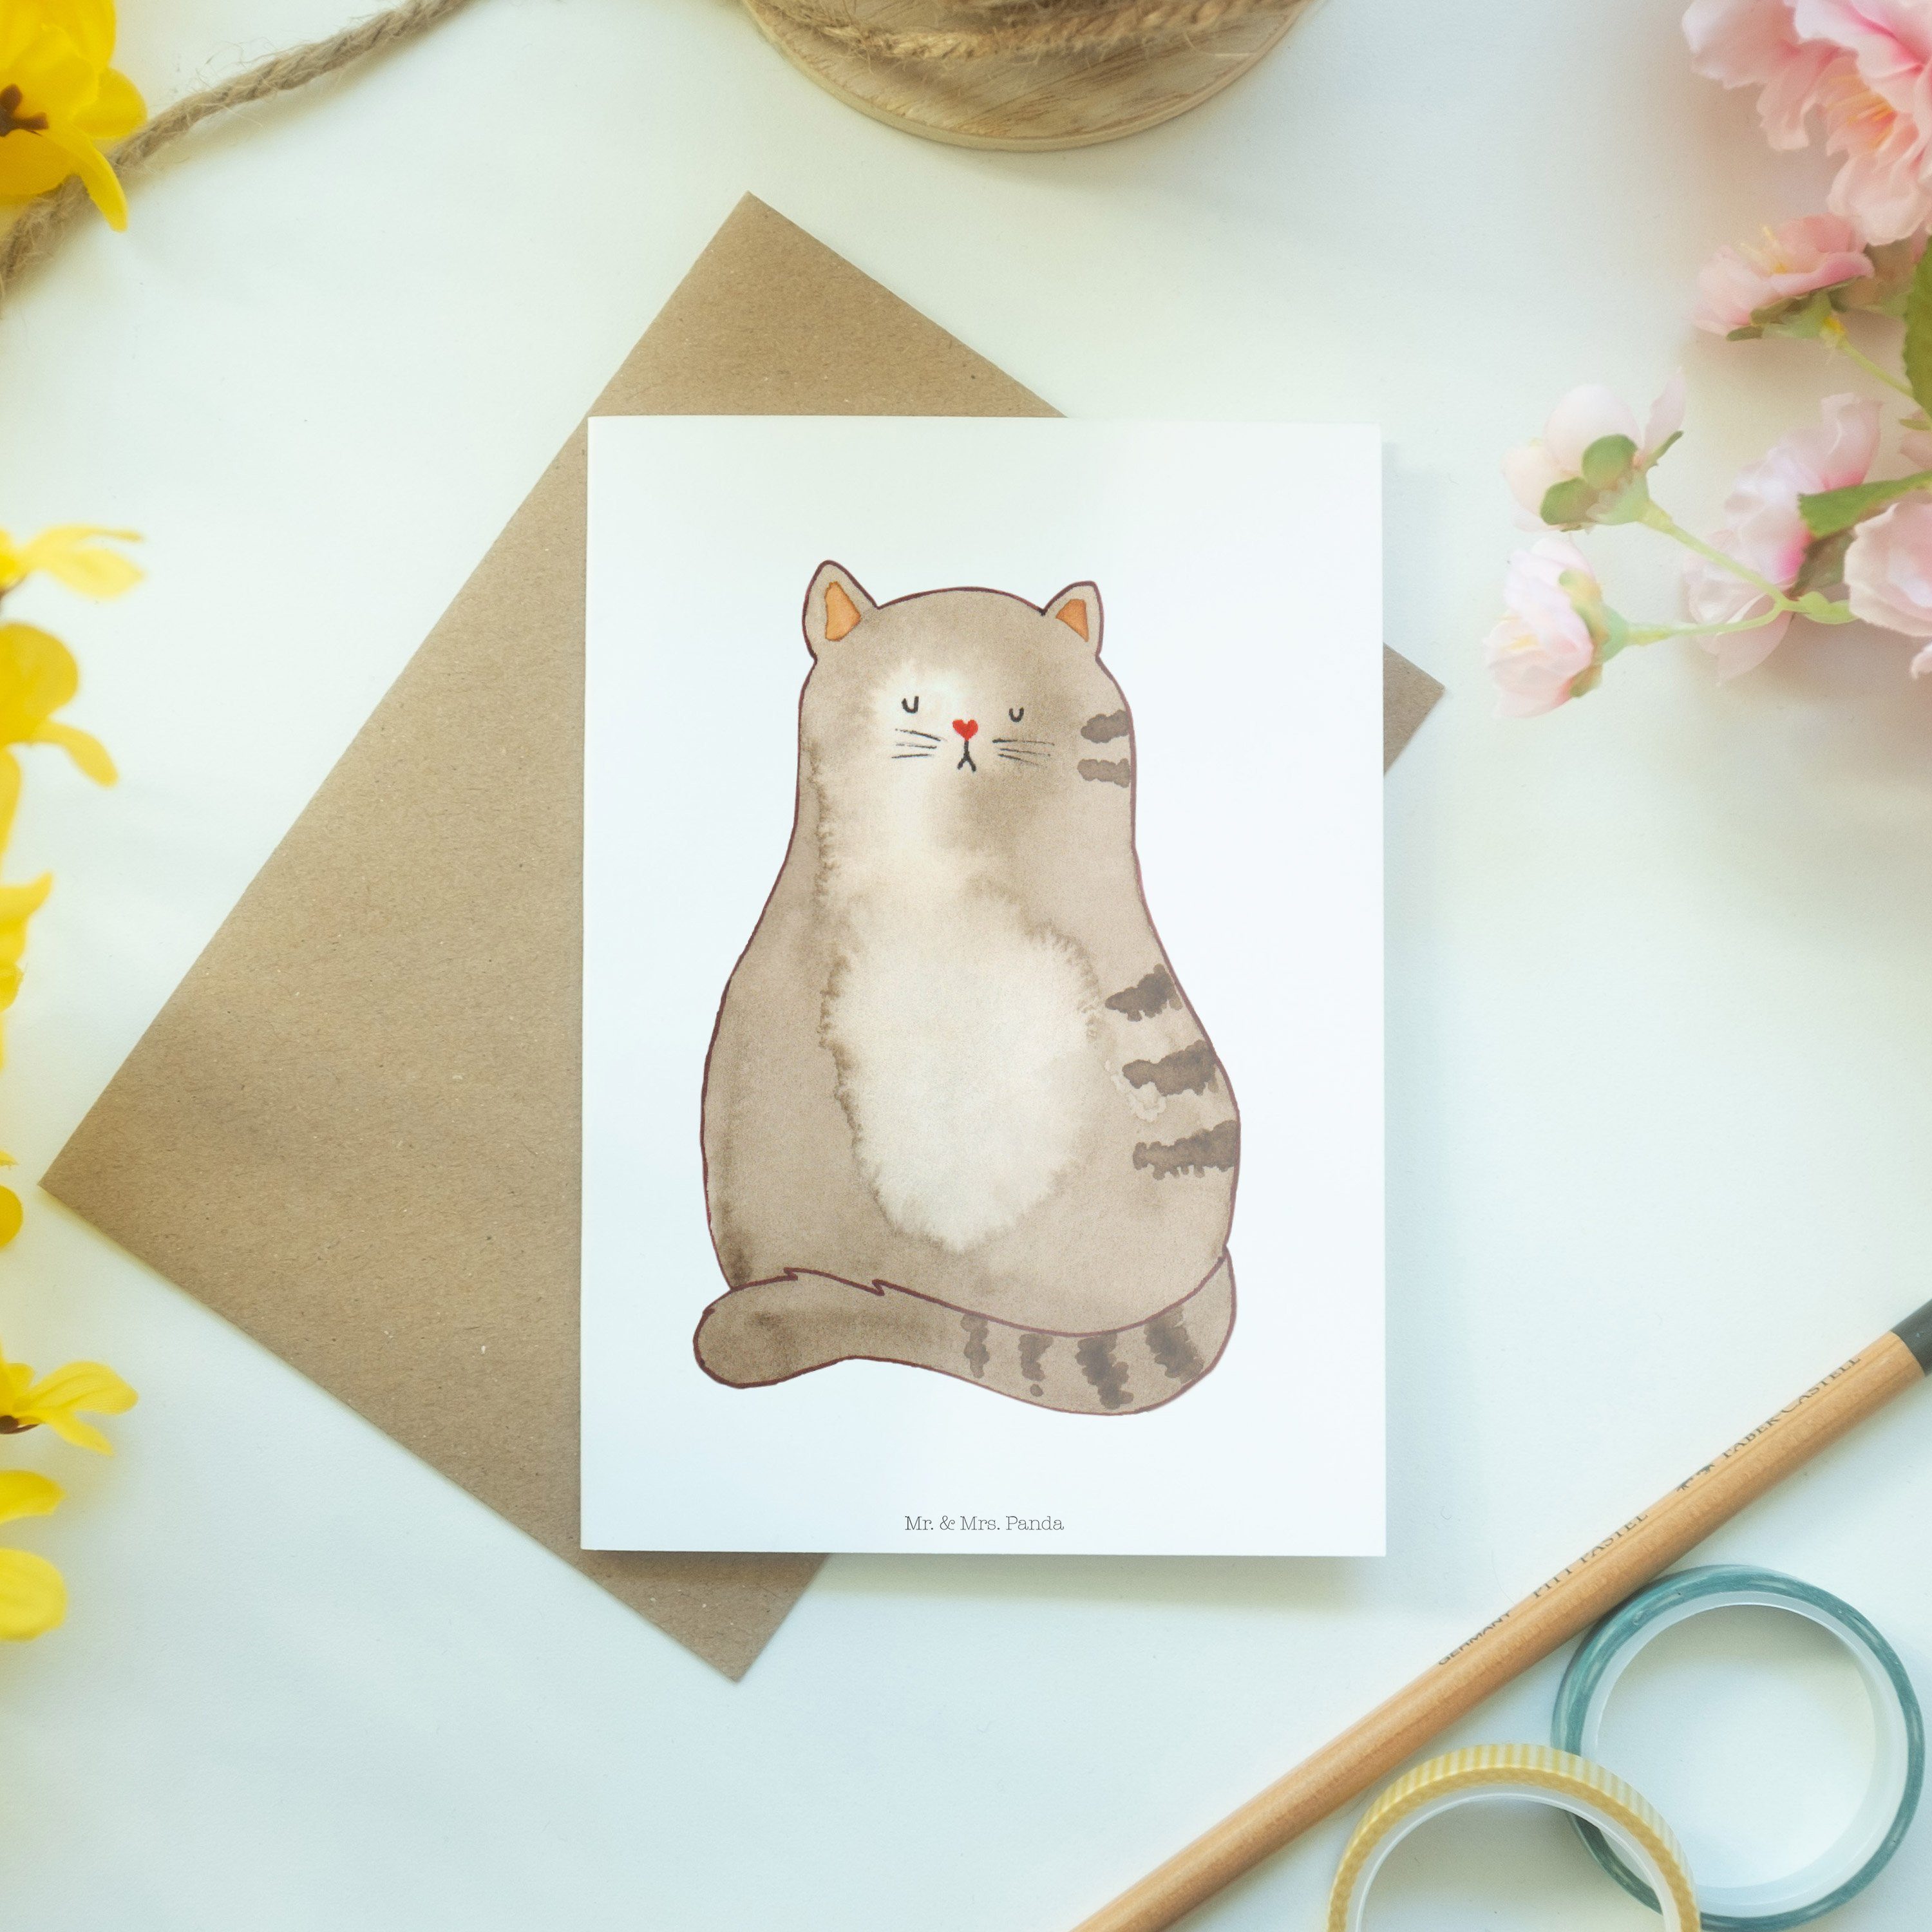 Mr. & Mrs. Panda Grußkarte - Katzendeko, Hochzeitskarte, Geschenk, - Katze K sitzend Weiß Karte